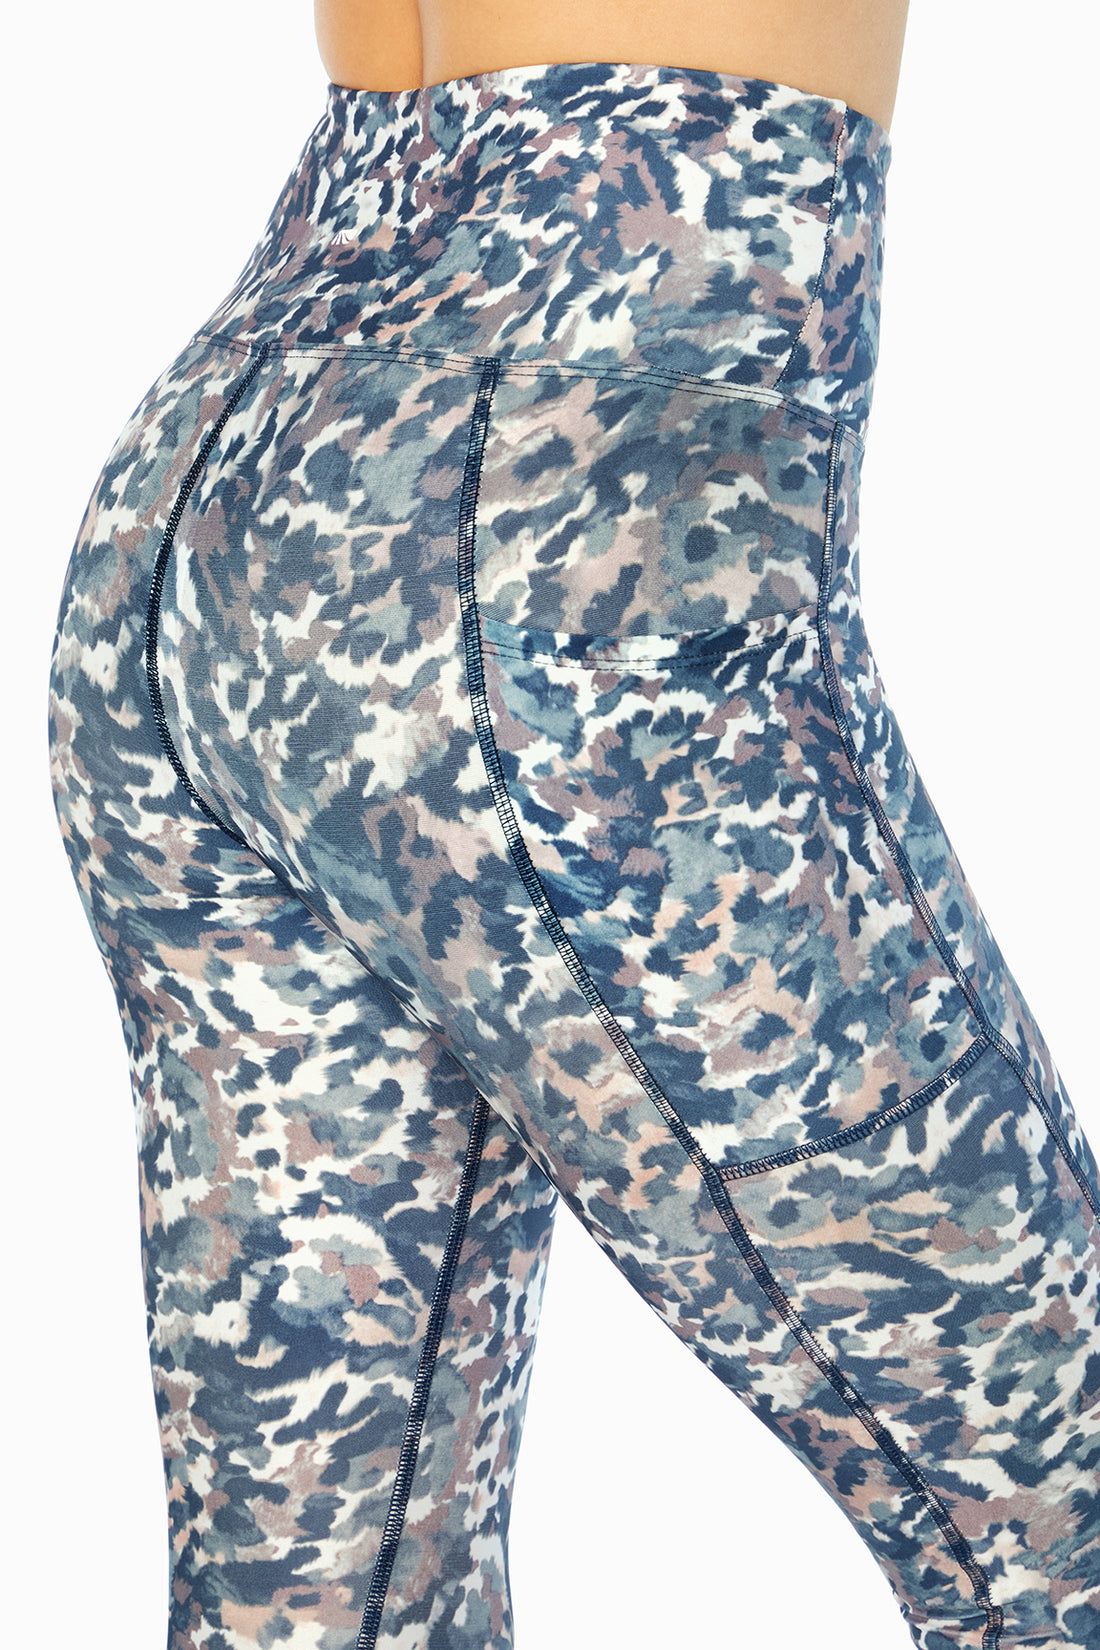 MARIKA Charcoal & Blue Camouflage Print Capri Legging - Large